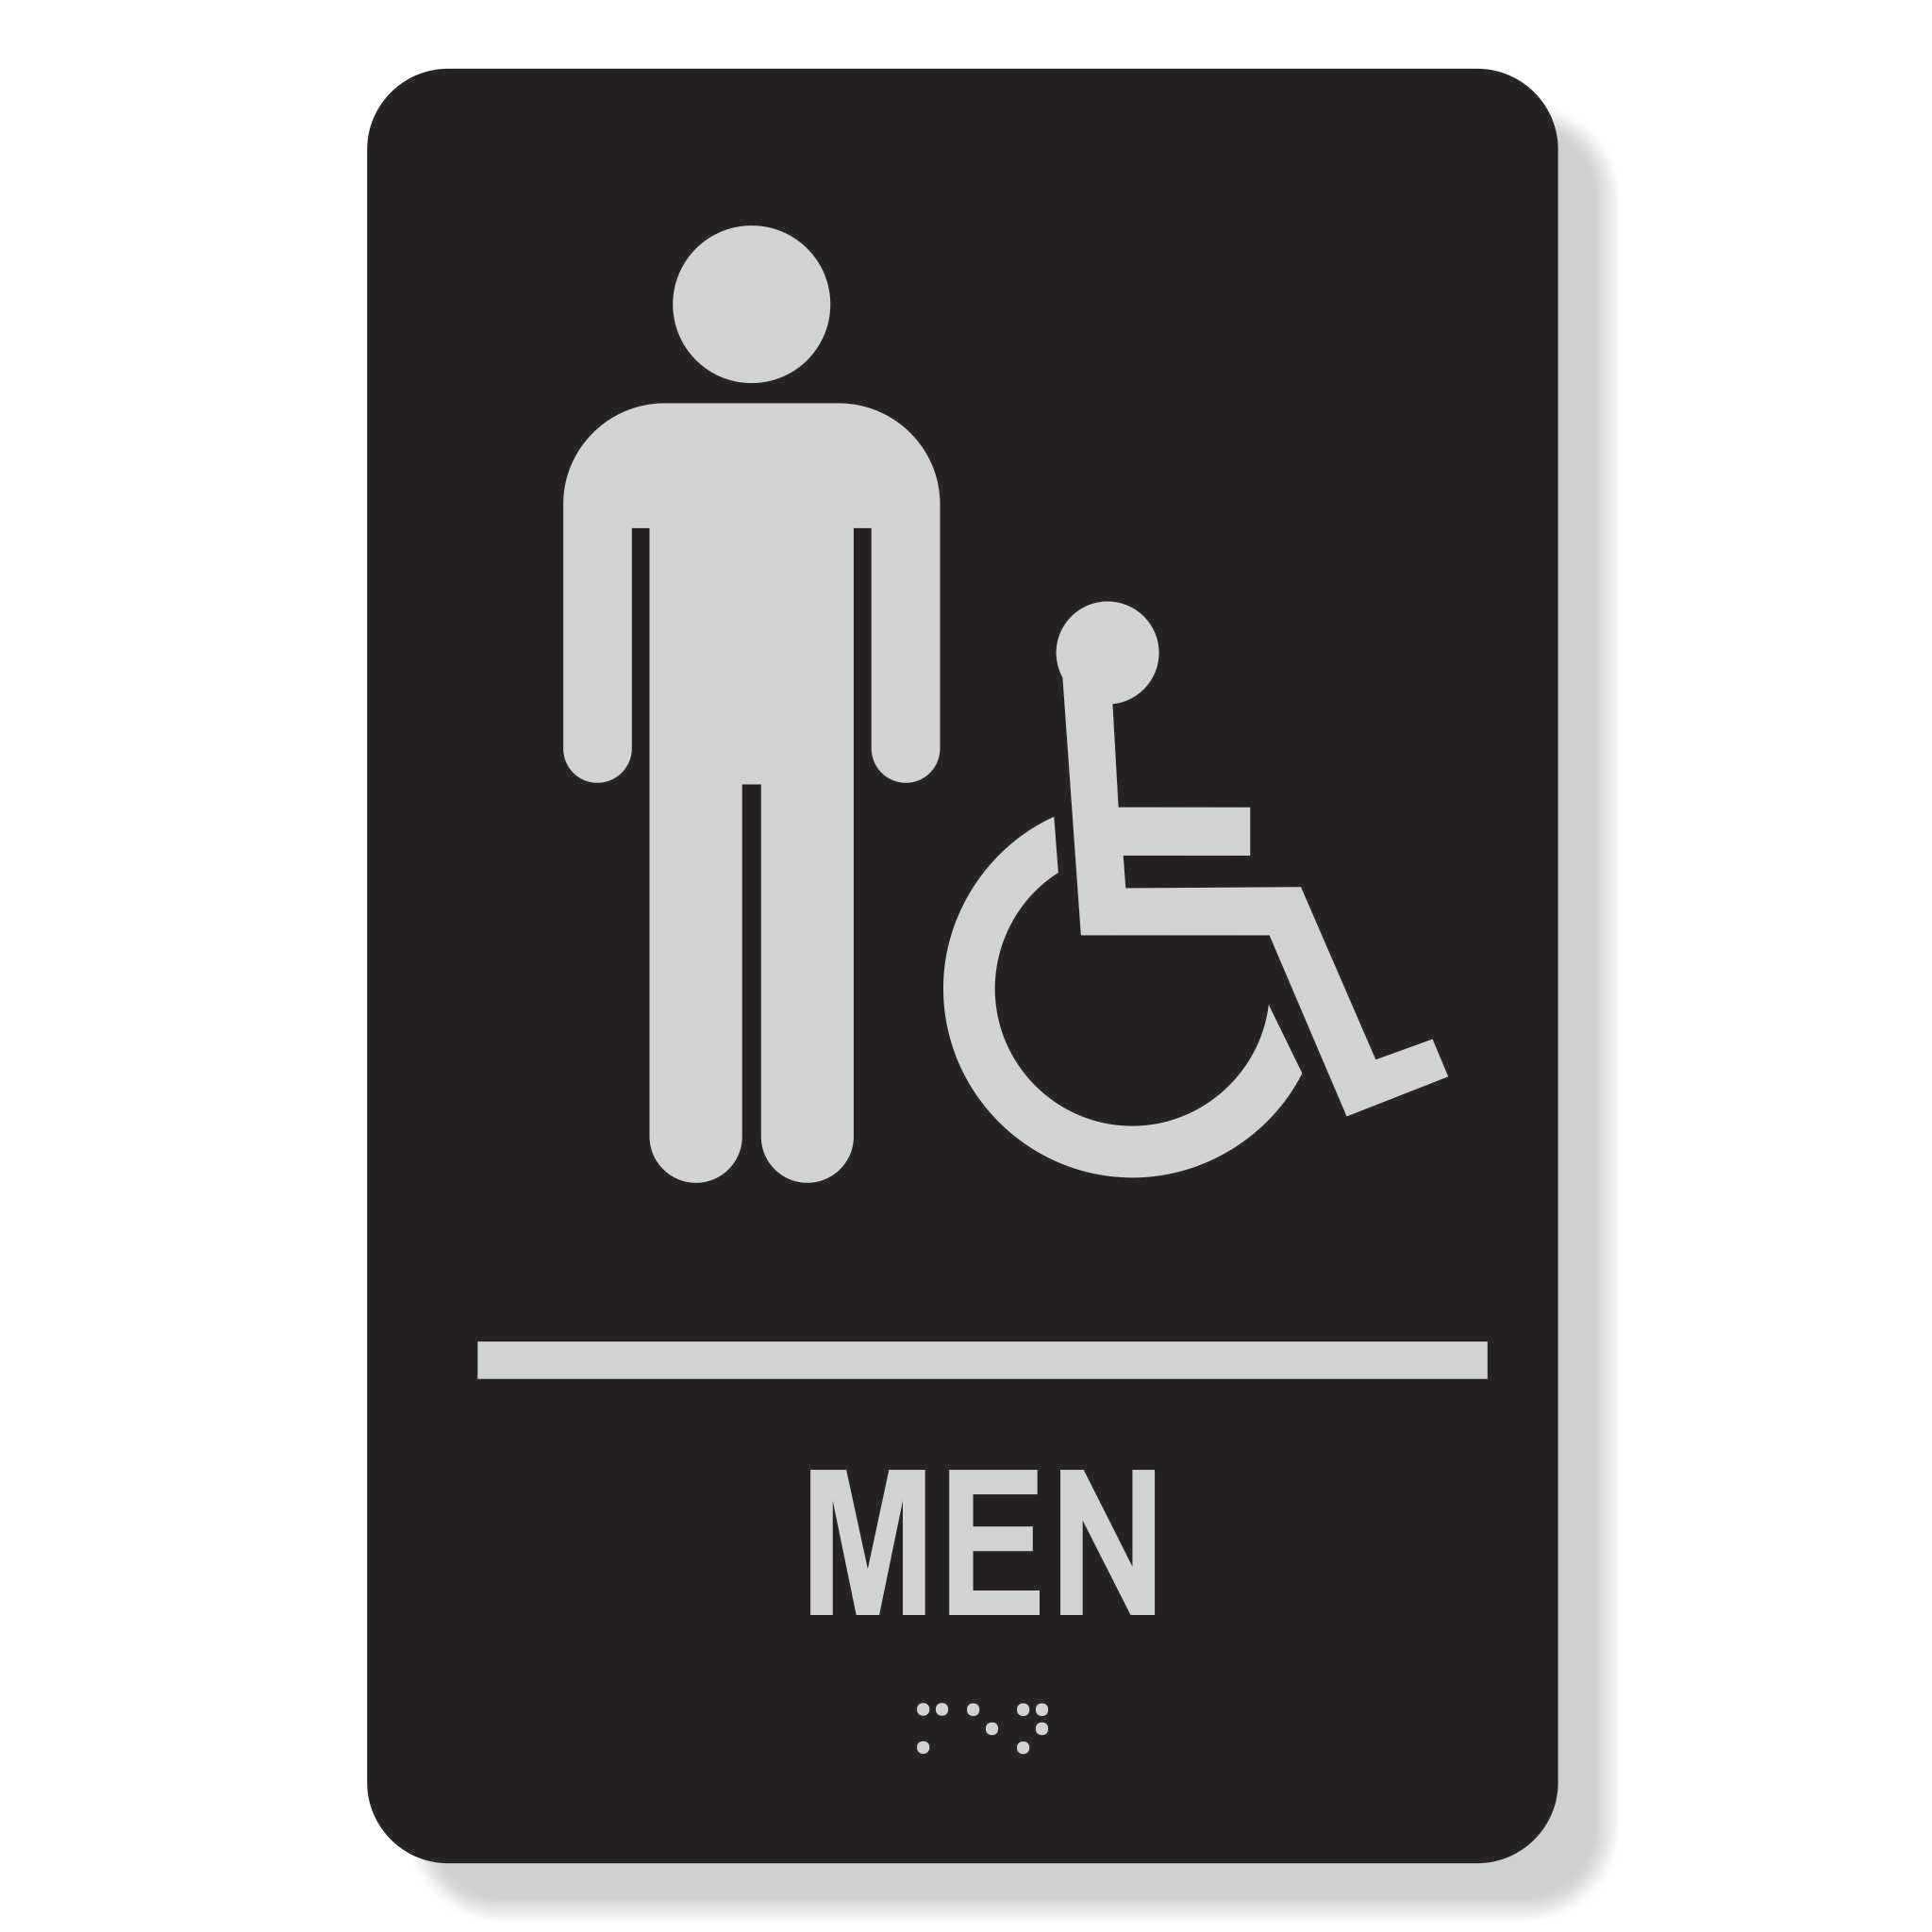 TJX- MENS accessible washroom sign